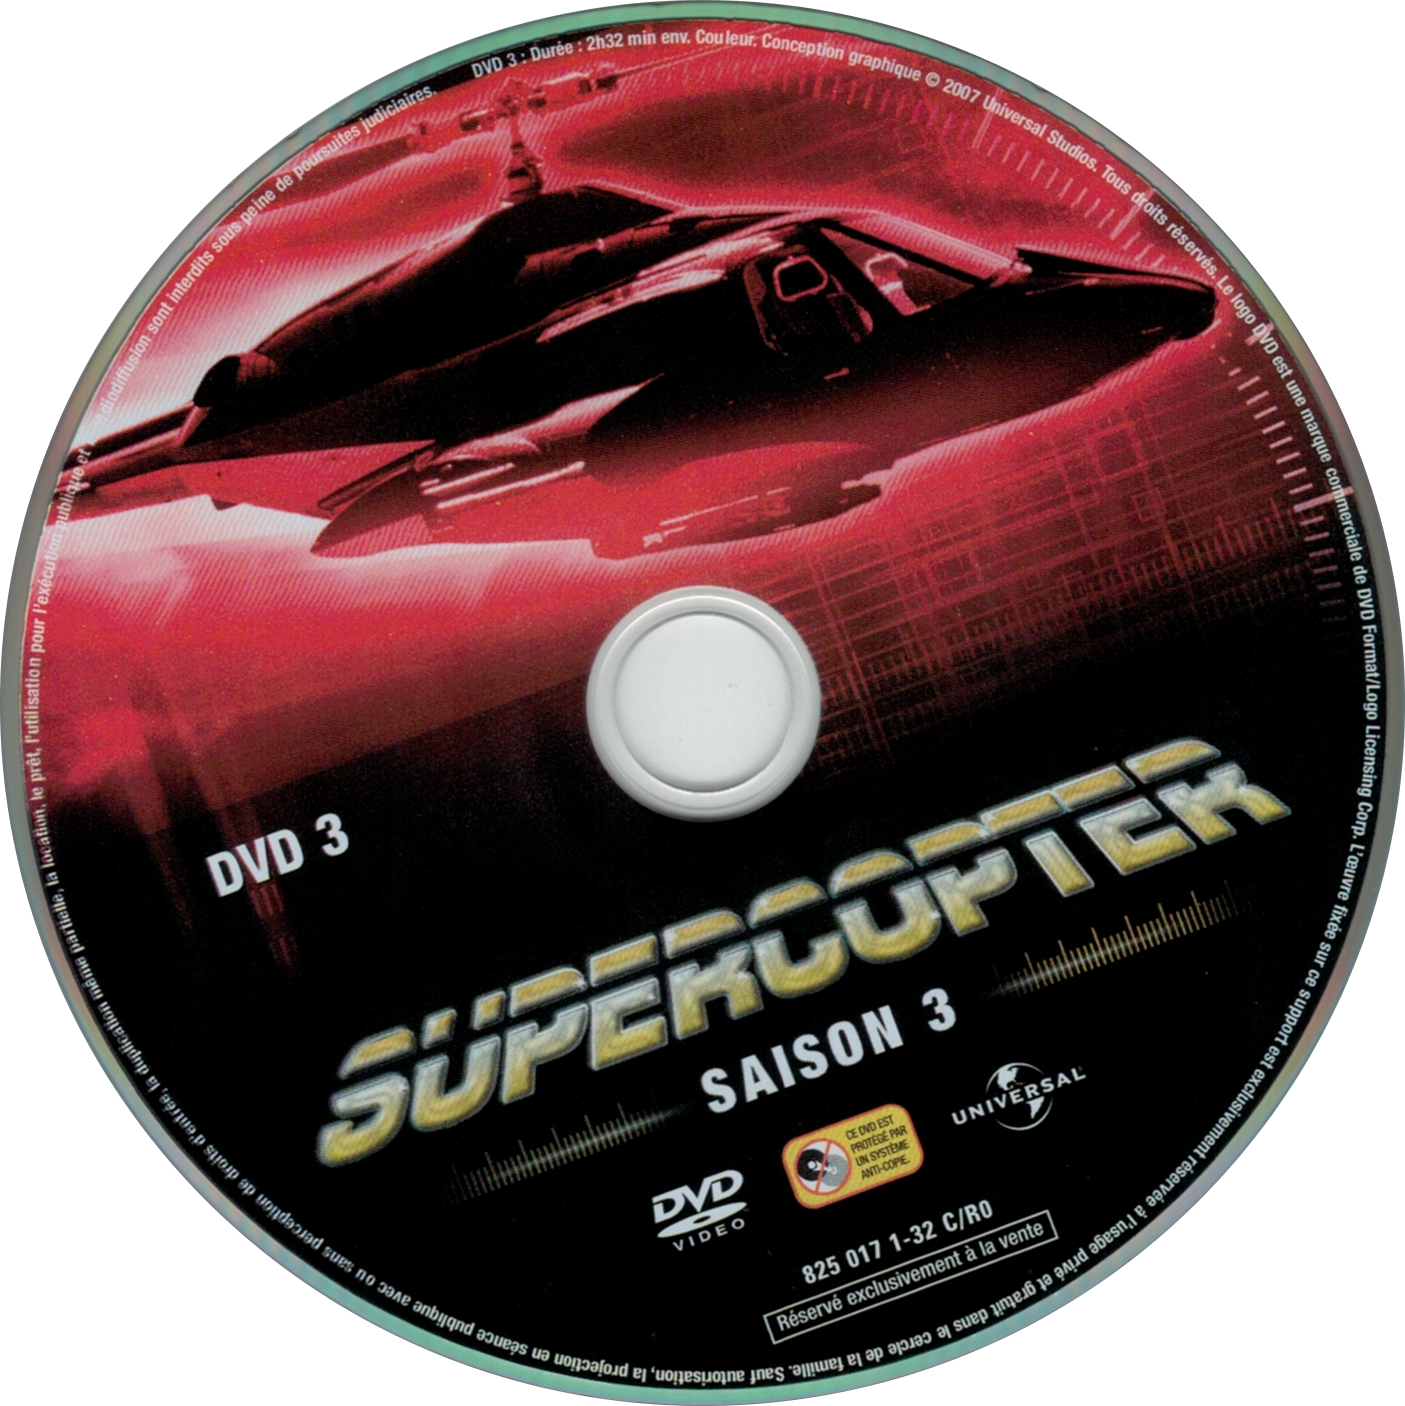 Supercopter Saison 3 DVD 3